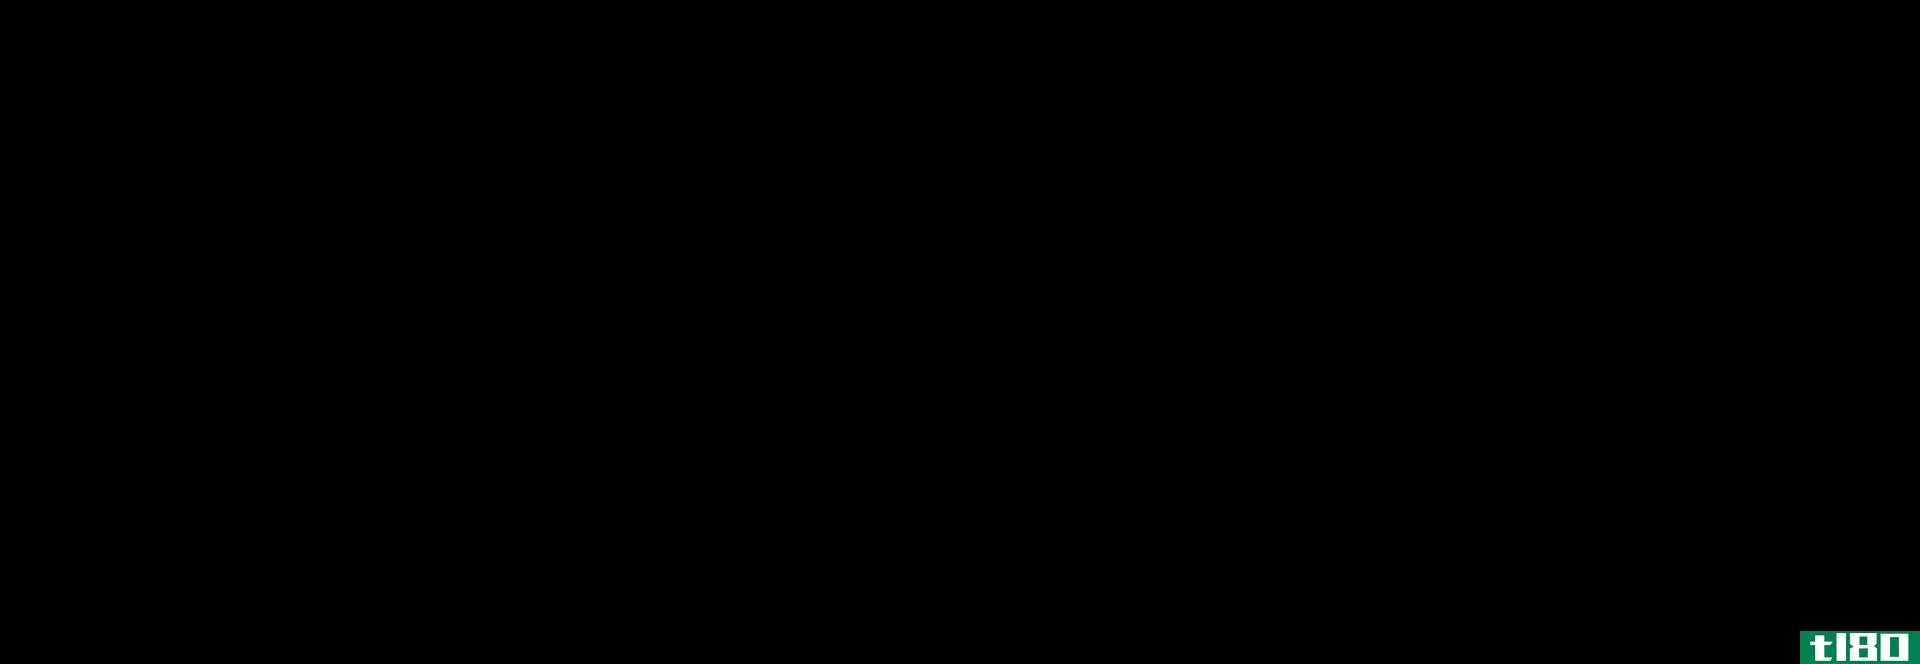 甲氨蝶呤(methotrexate)和甲氨蝶呤钠(methotrexate sodium)的区别